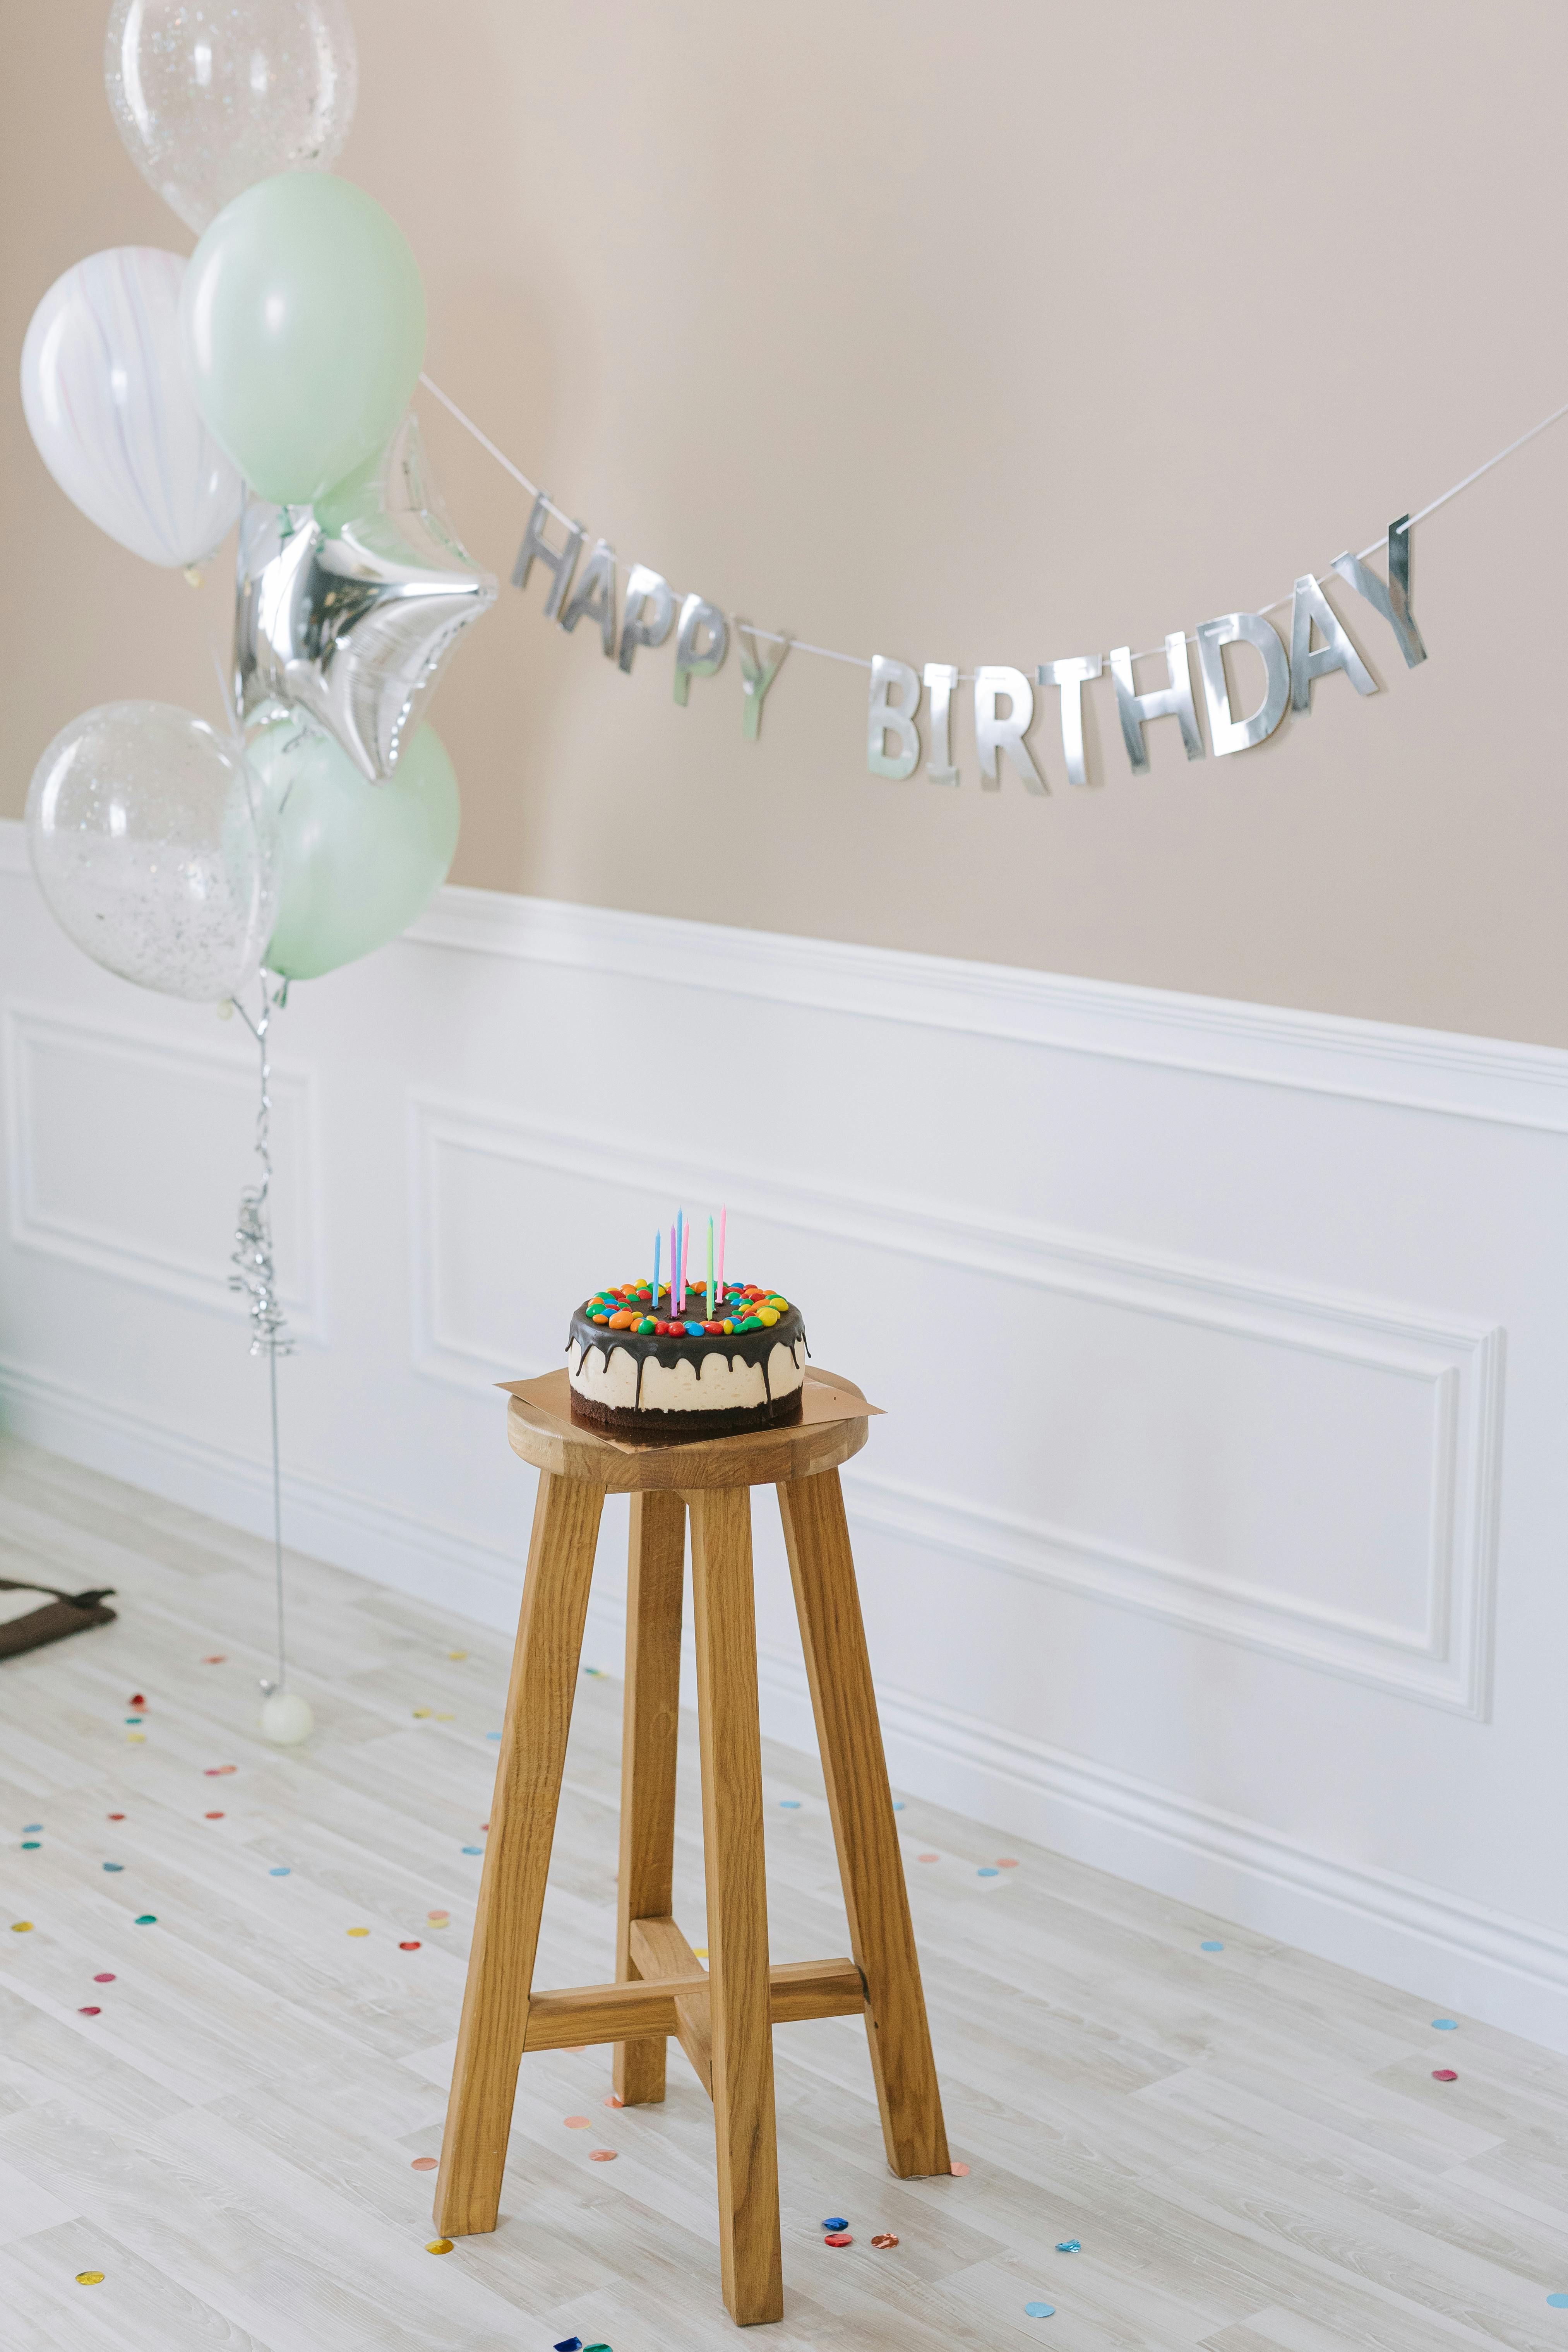 Birthday decorations | Source: Pexels